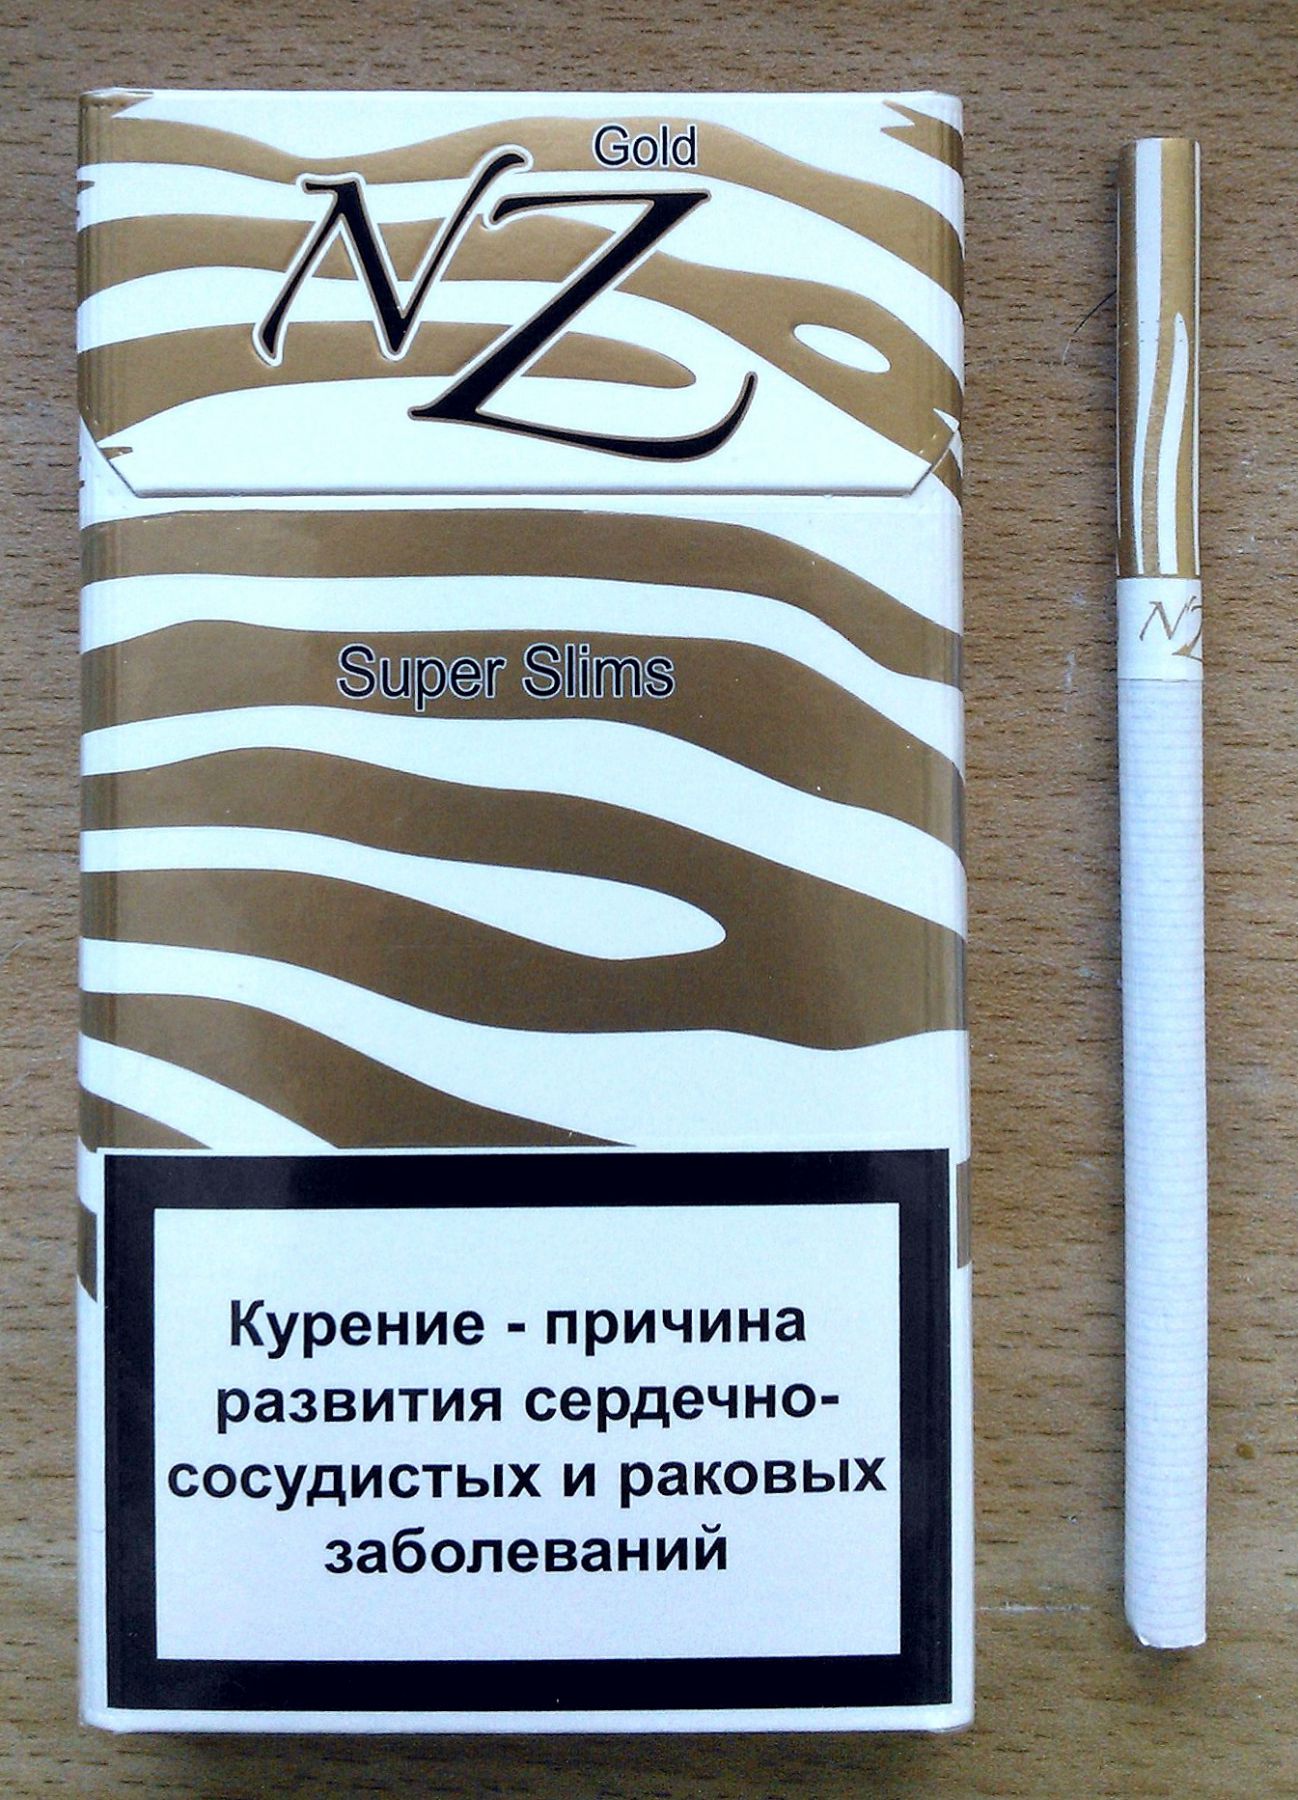 Нз компакт. Сигареты Белорусские НЗ 8 НЗ 10. НЗ сафари сигареты компакт. Сигареты nz Gold super Slims. Сигареты nz Gold супер слим.